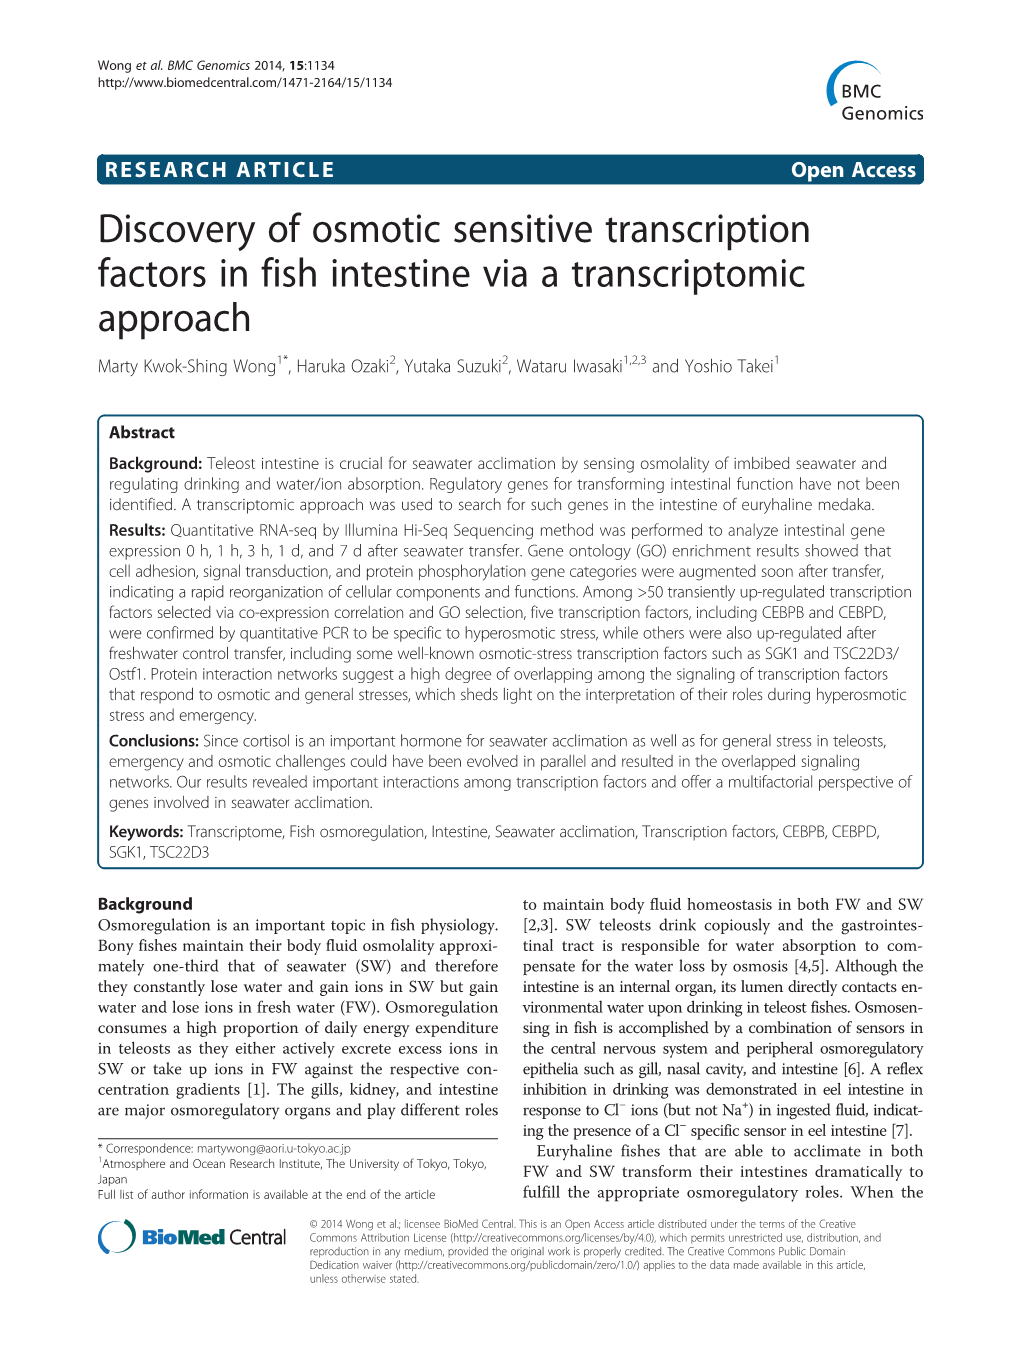 Discovery of Osmotic Sensitive Transcription Factors in Fish Intestine Via a Transcriptomic Approach